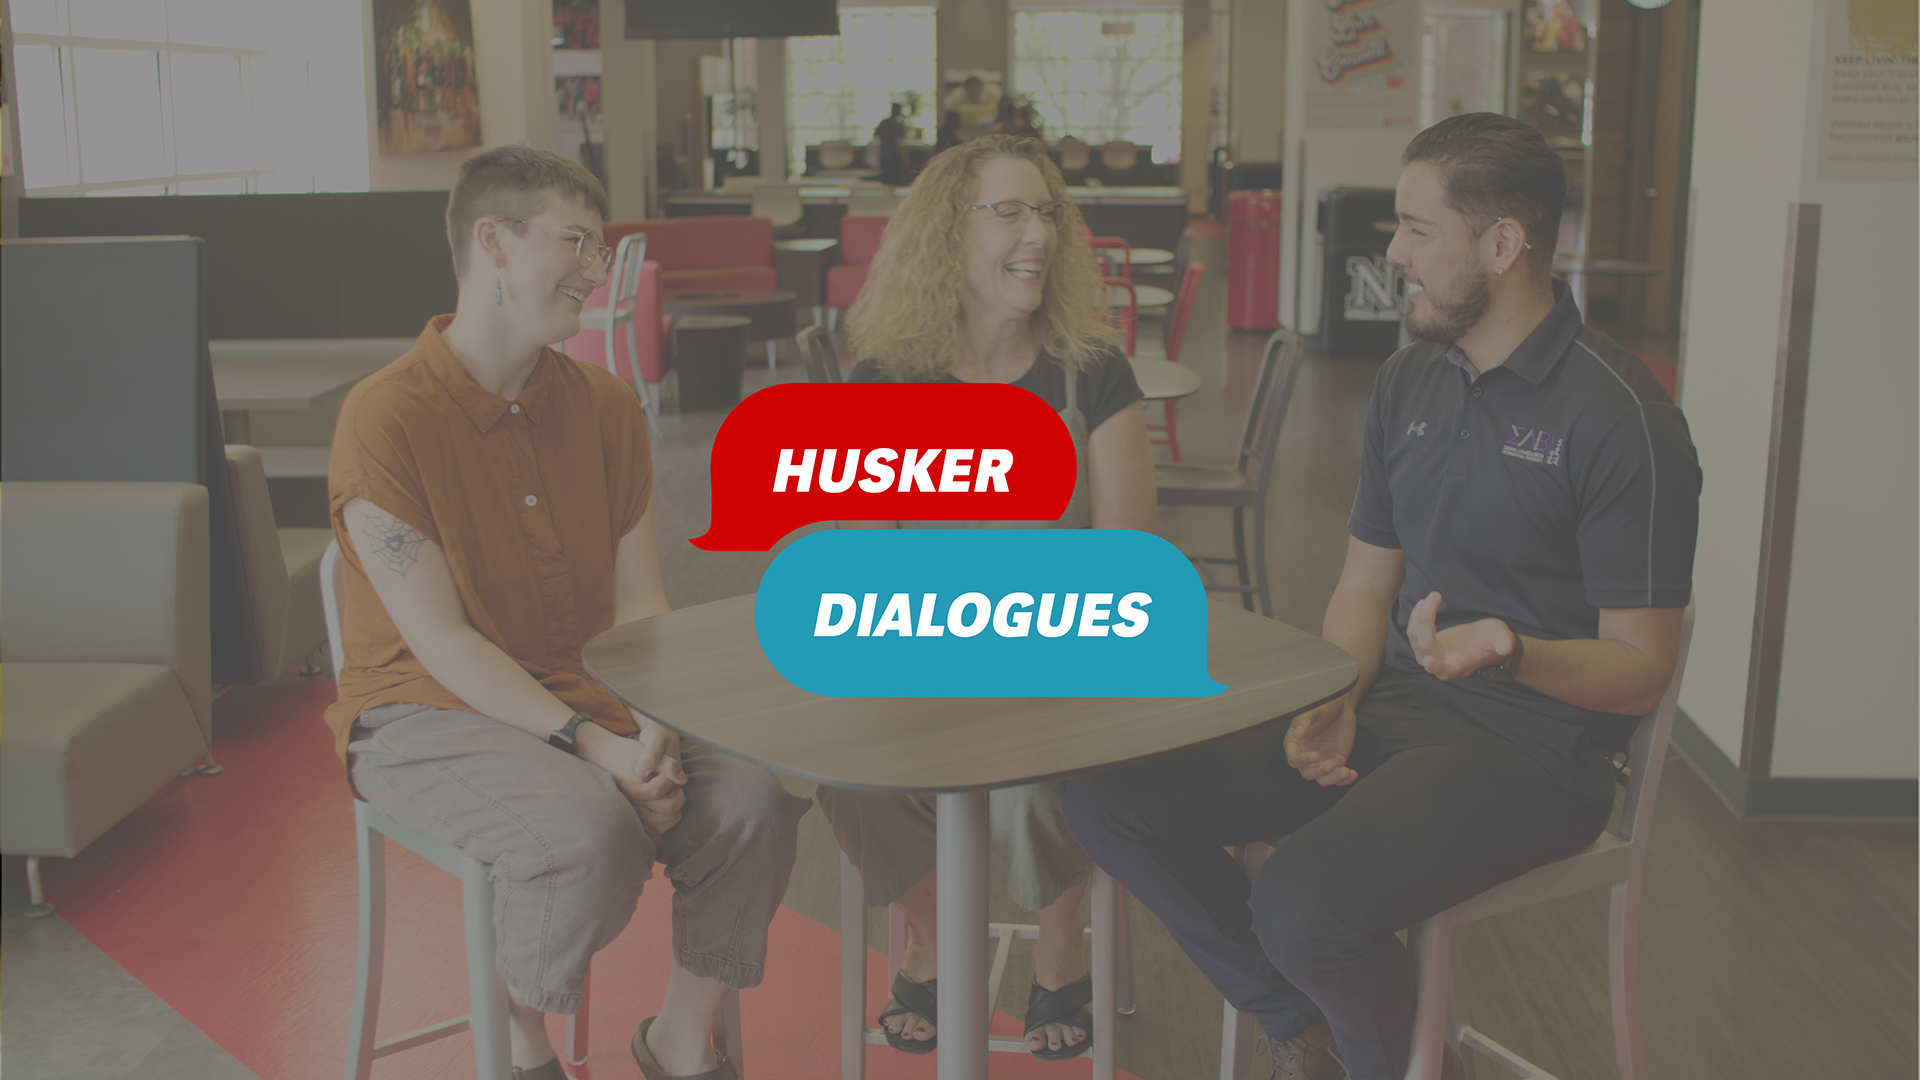 Husker Dialogues a Conversation Guide! MediaHub University